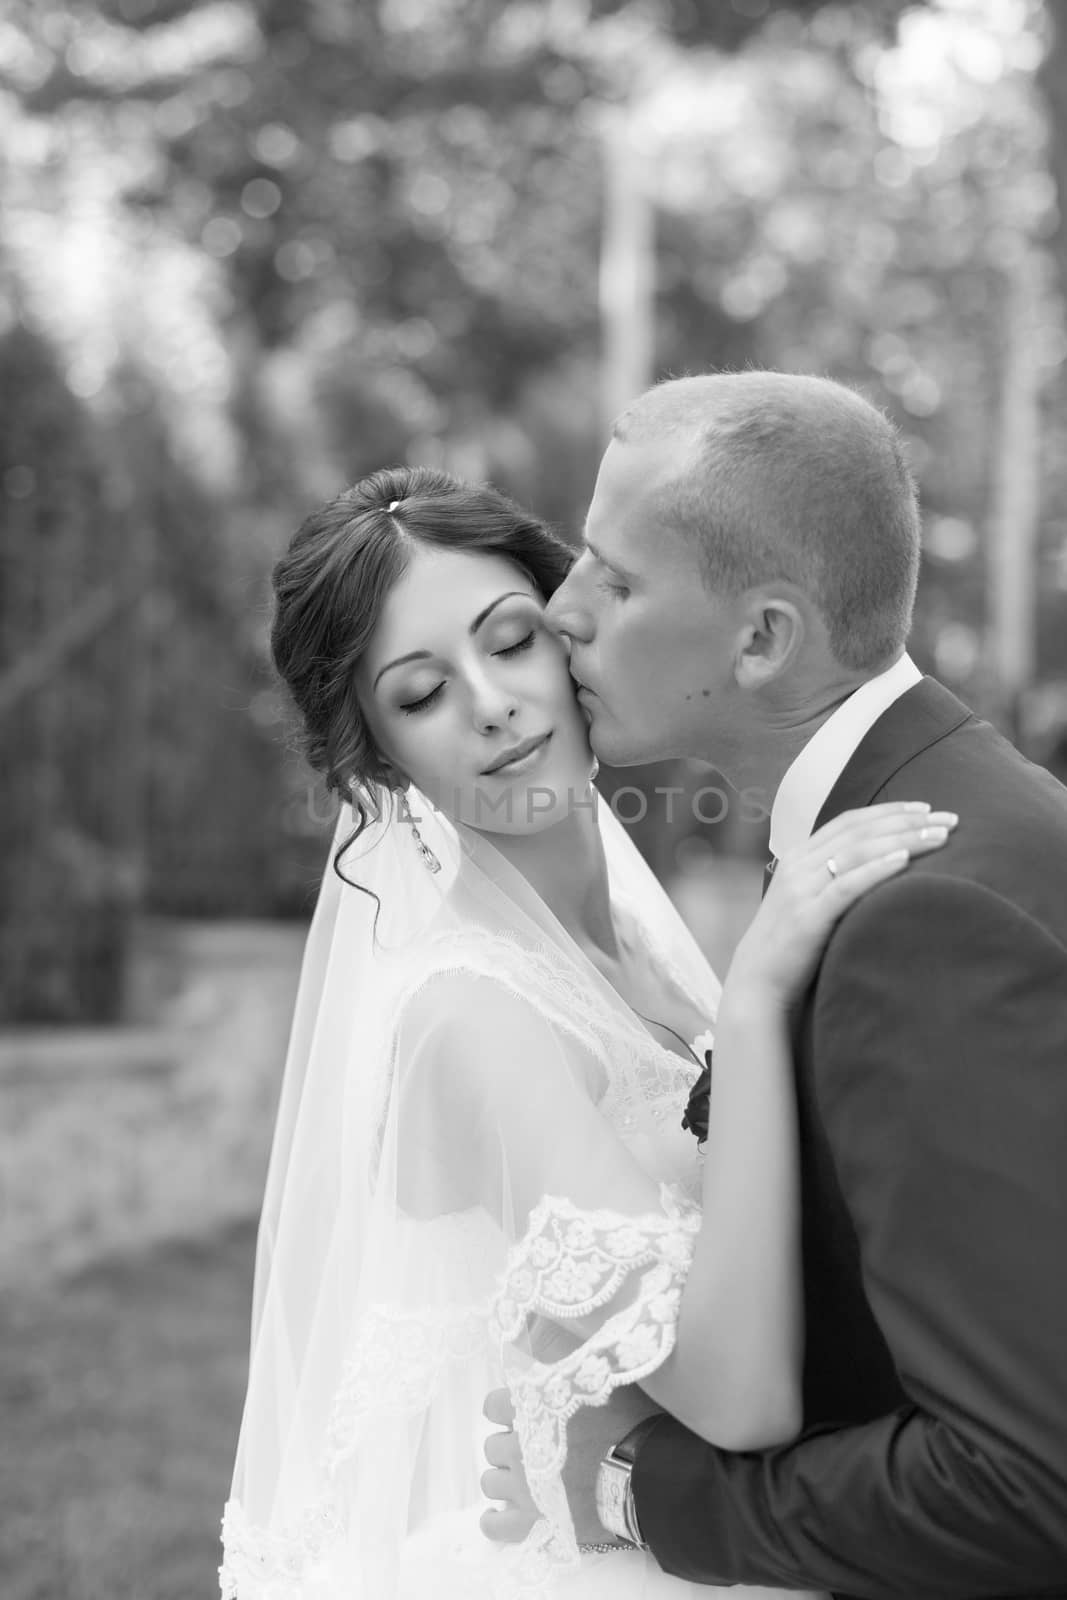 Gentle groom kiss by lanser314